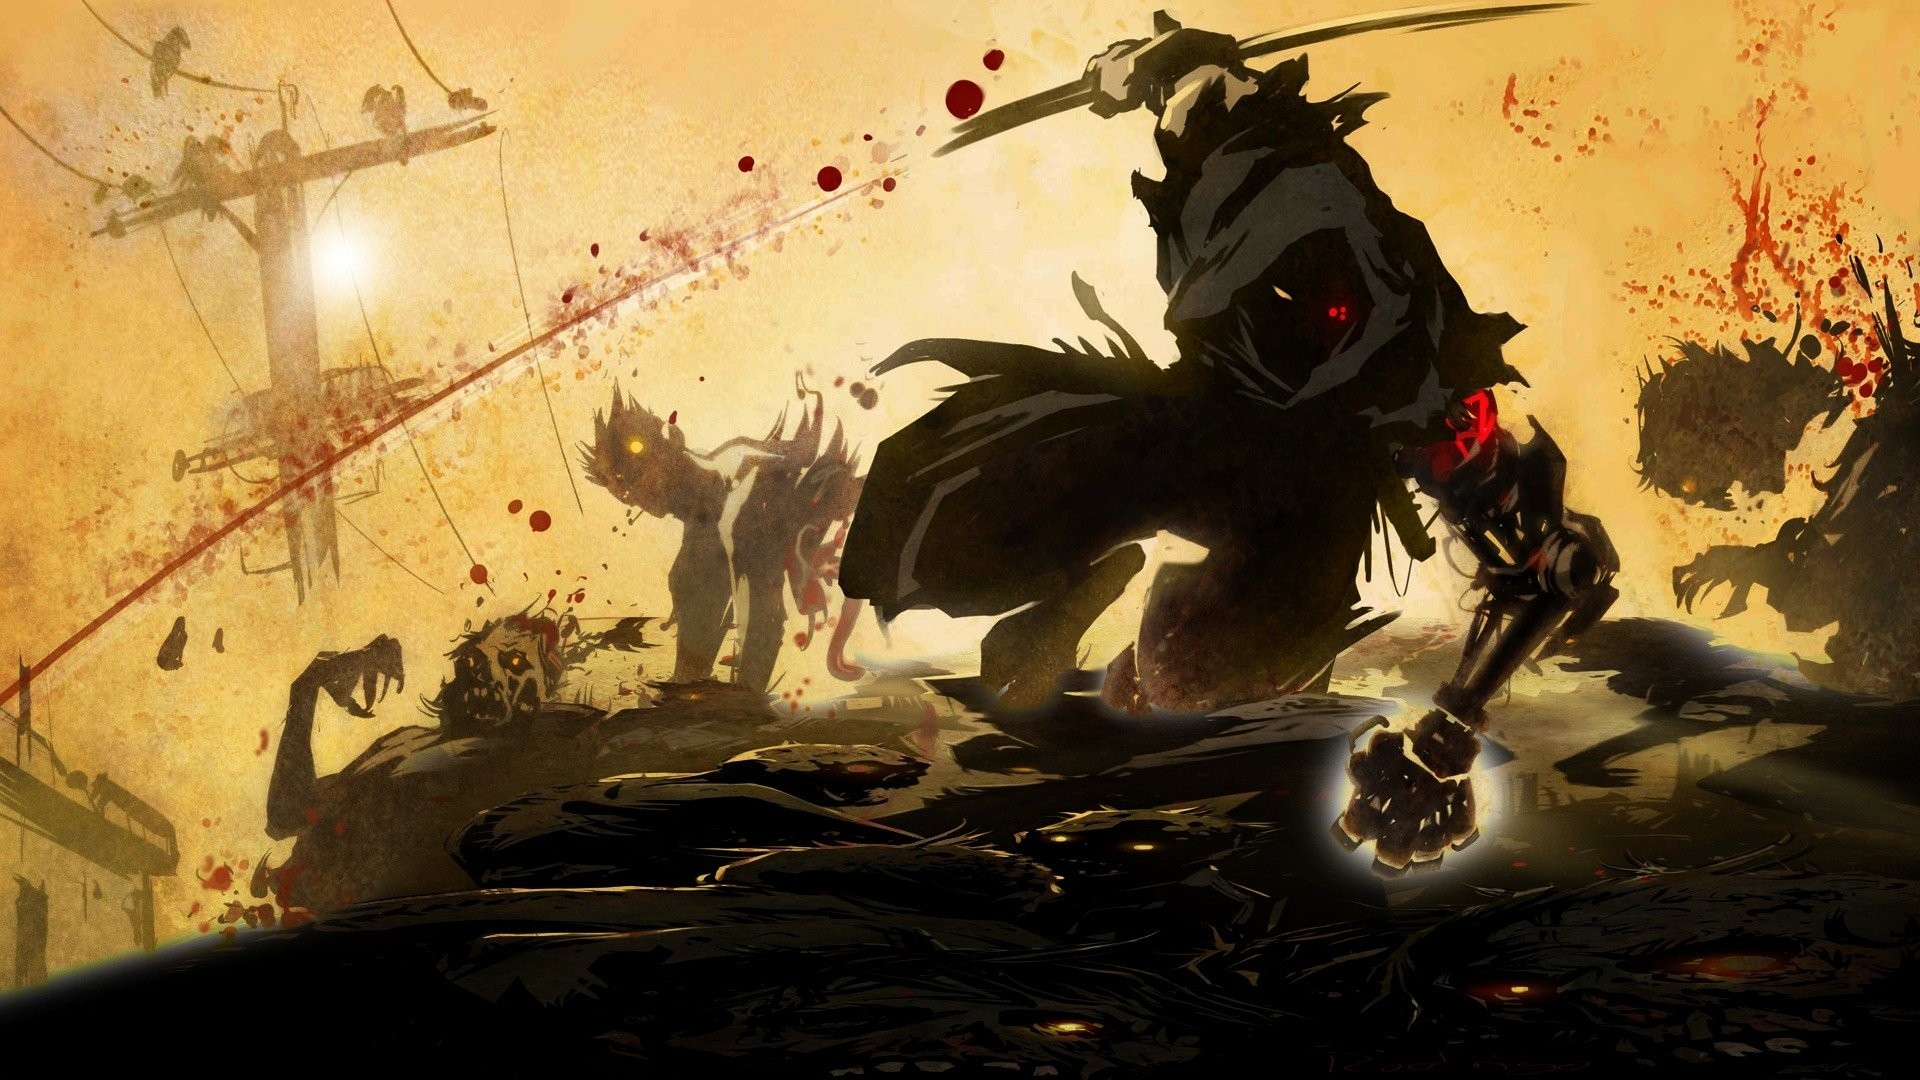 ninja assassin wallpaper,action adventure spiel,cg kunstwerk,illustration,grafikdesign,spiele